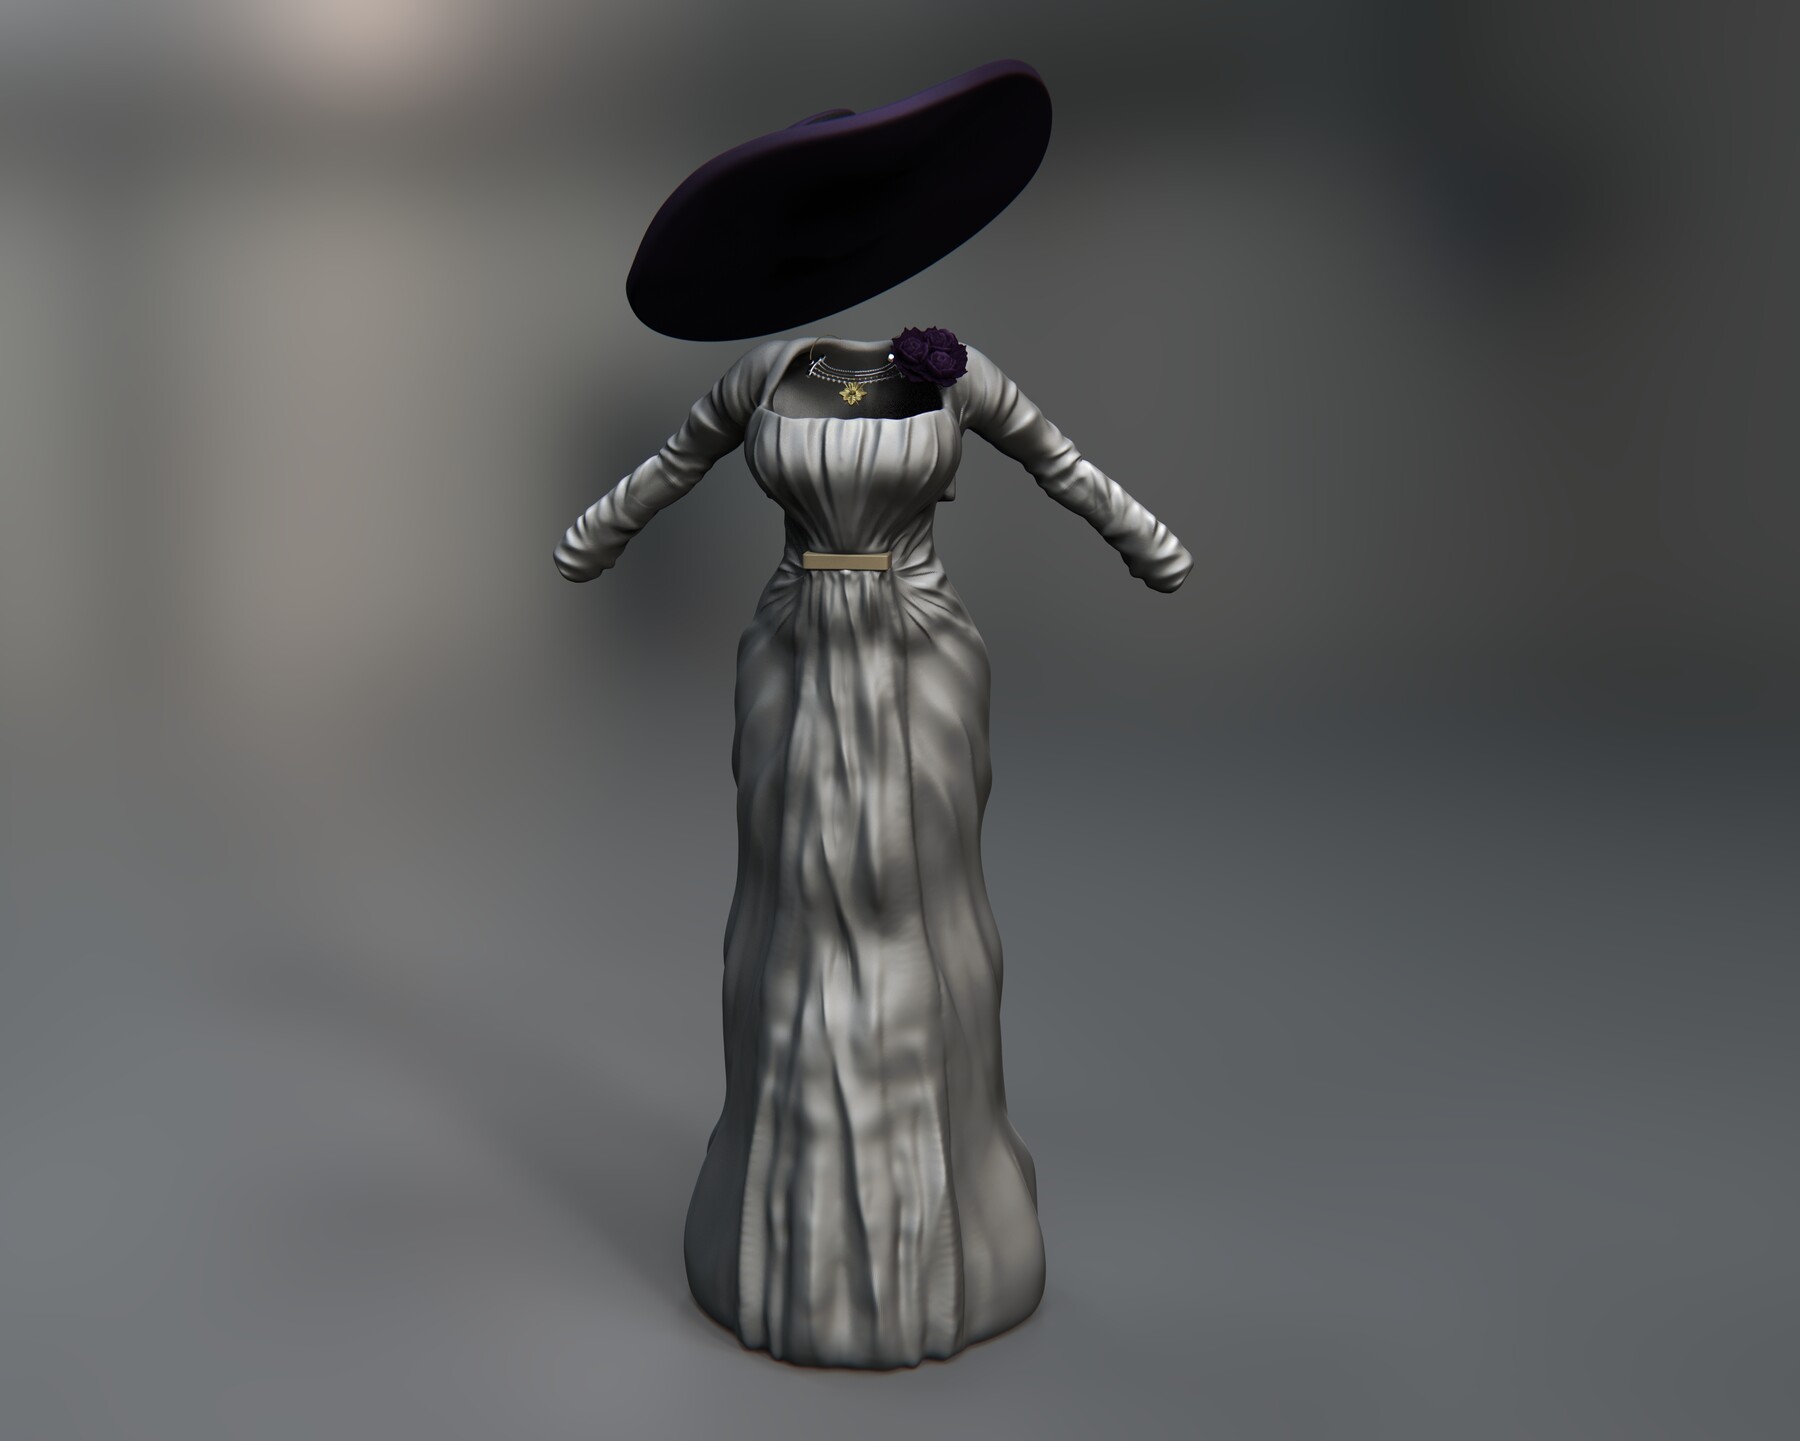 Female hightpoly T-Pose | 3D model